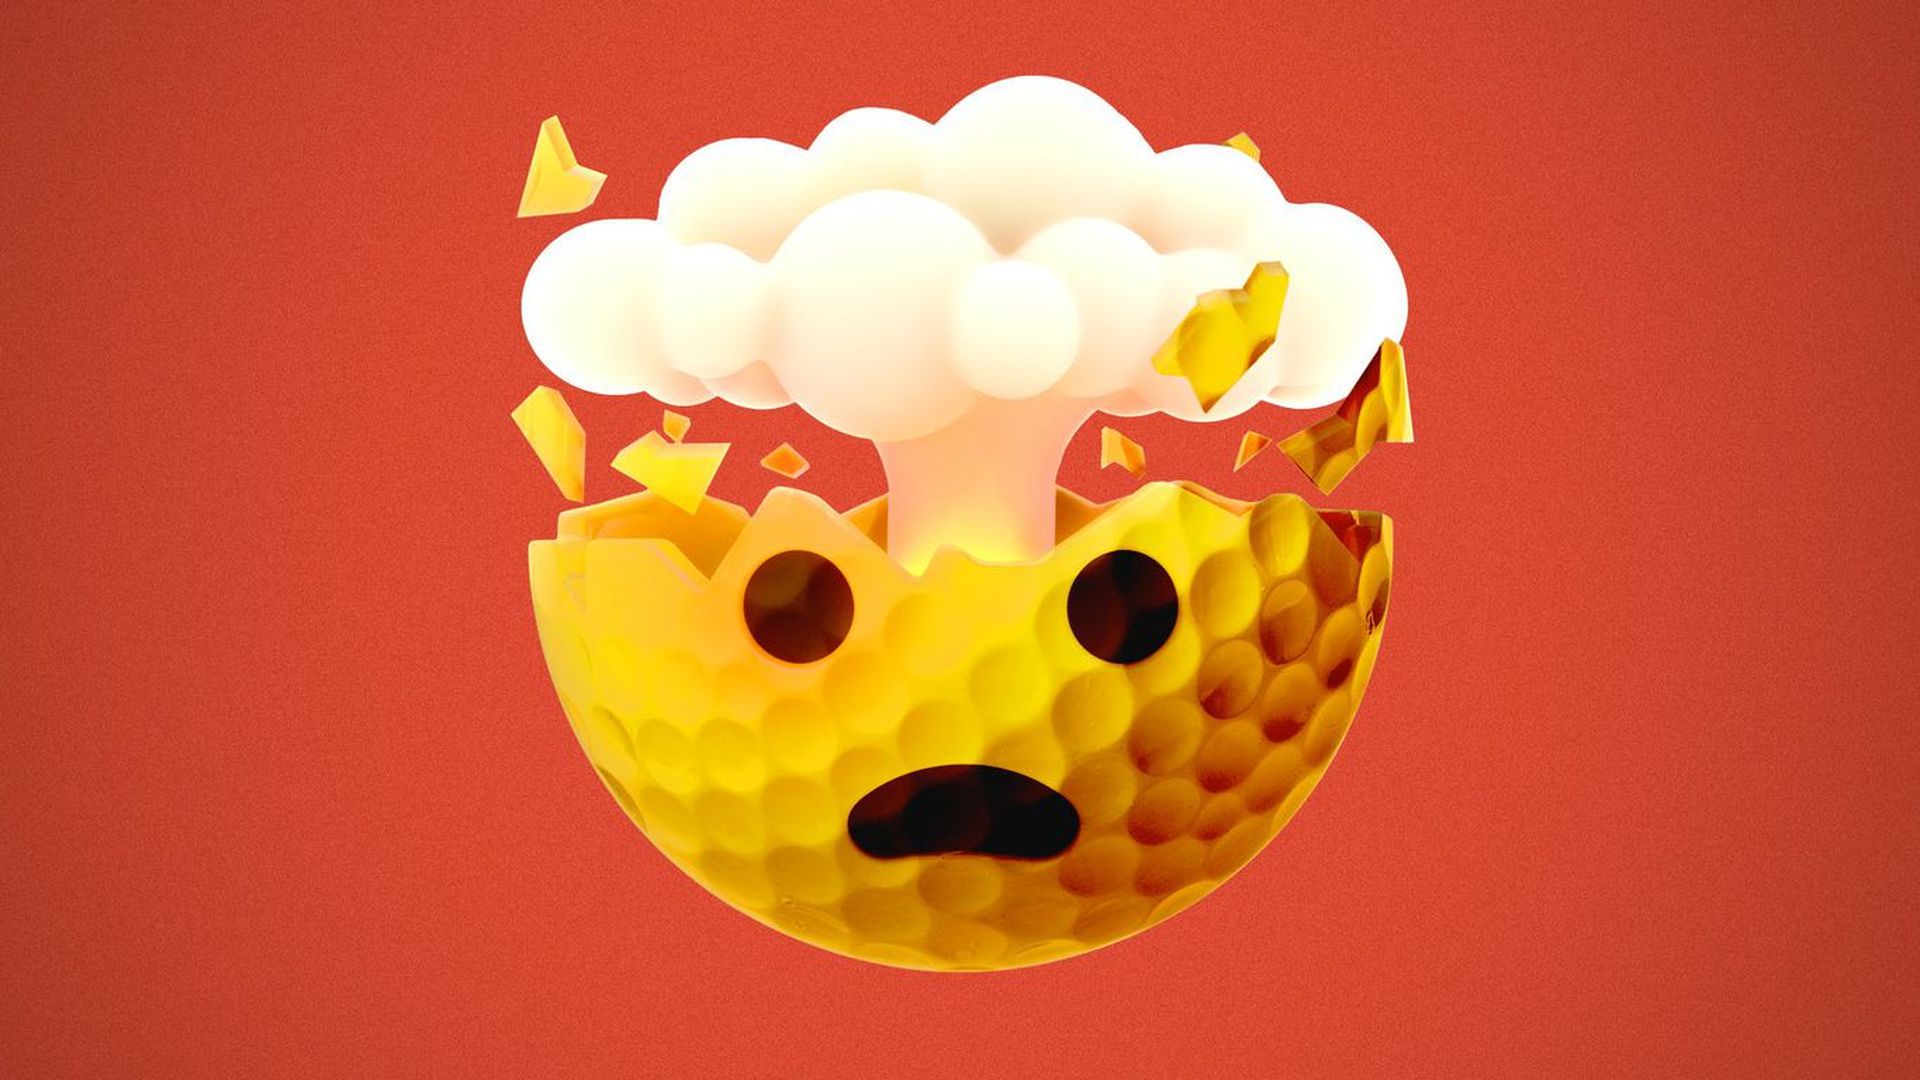 A golf ball in the shape of a mind blown emoji